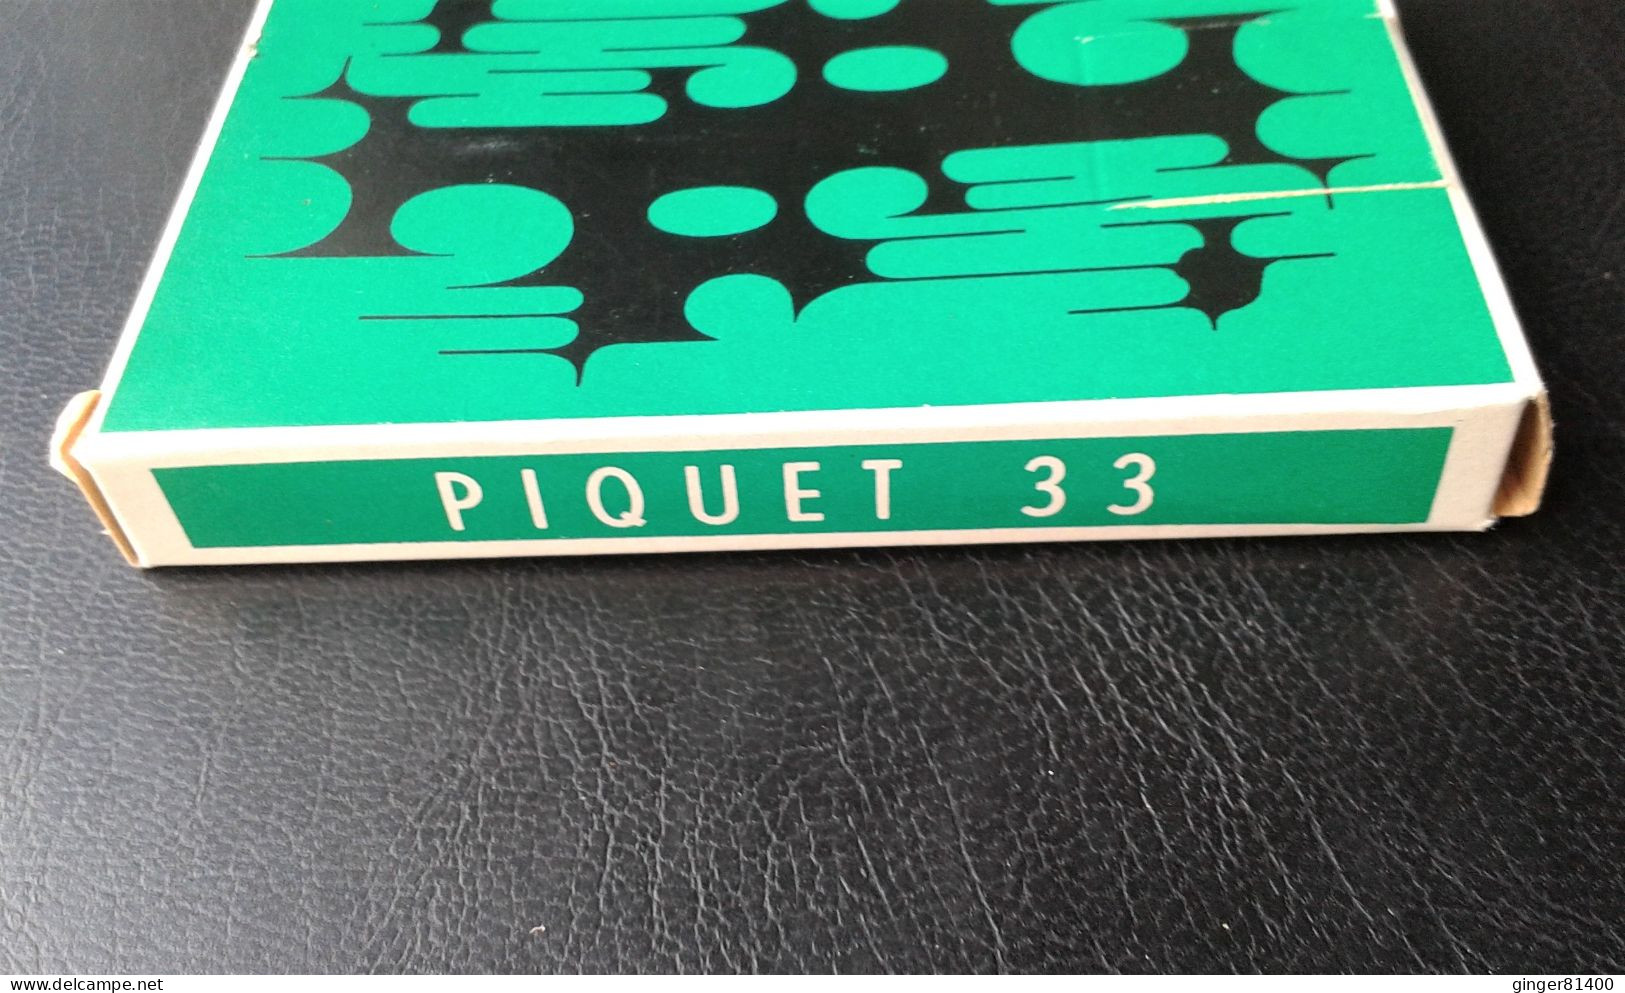 Jeu complet de 33 cartes "PIKET 33 / PIQUET 33 n°666, coins dorés, fabriqué en Belgique en très bon état